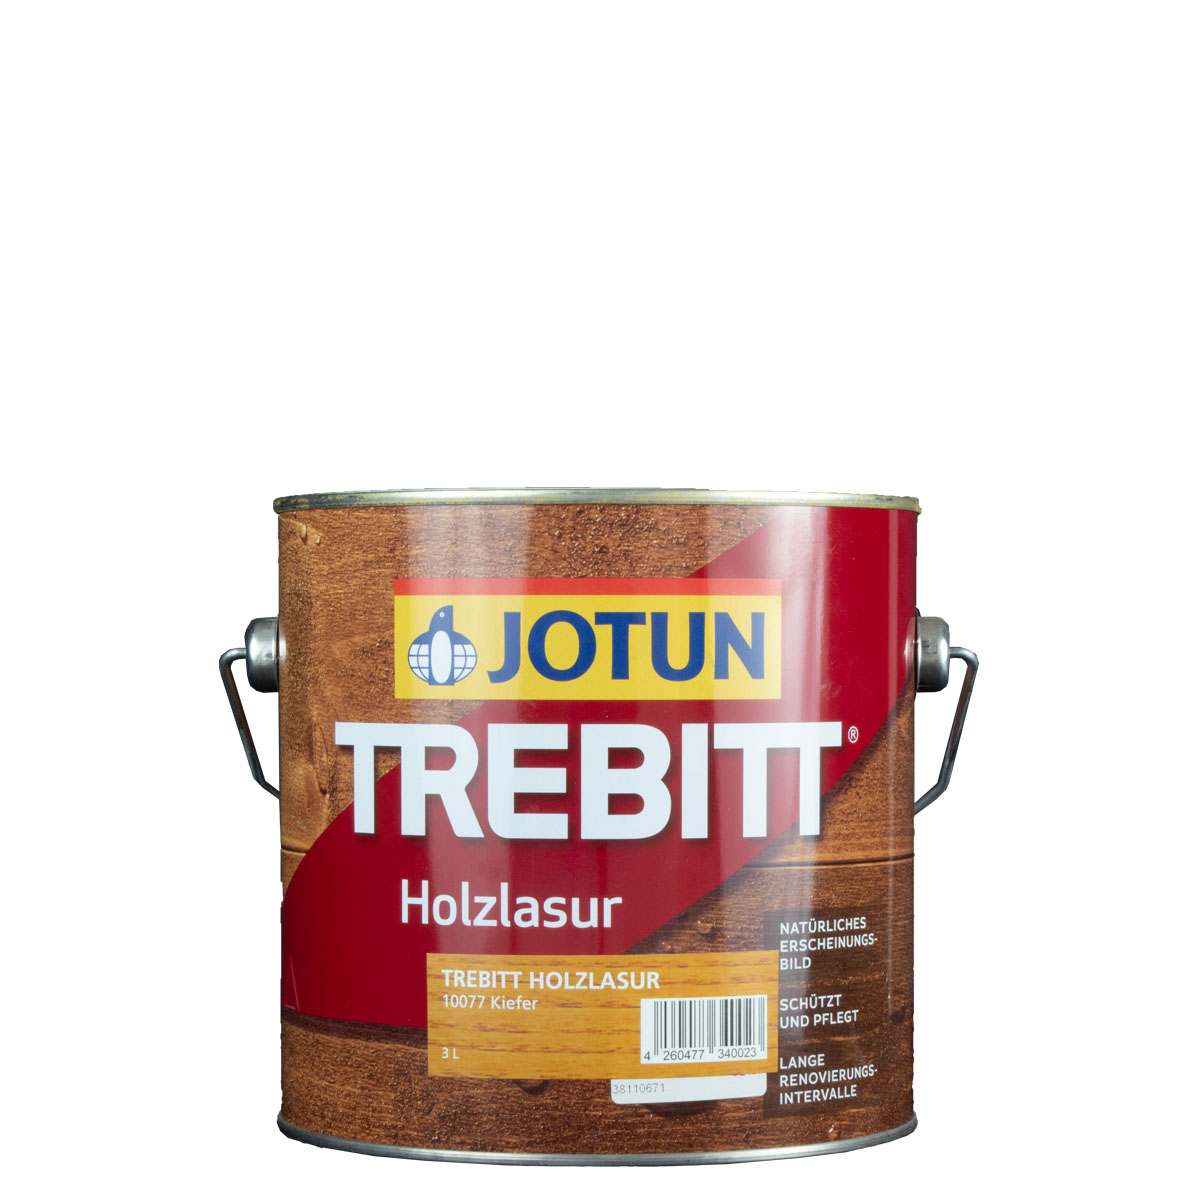 Jotun Trebitt 3L kiefer 10077, Holzschutzlasur